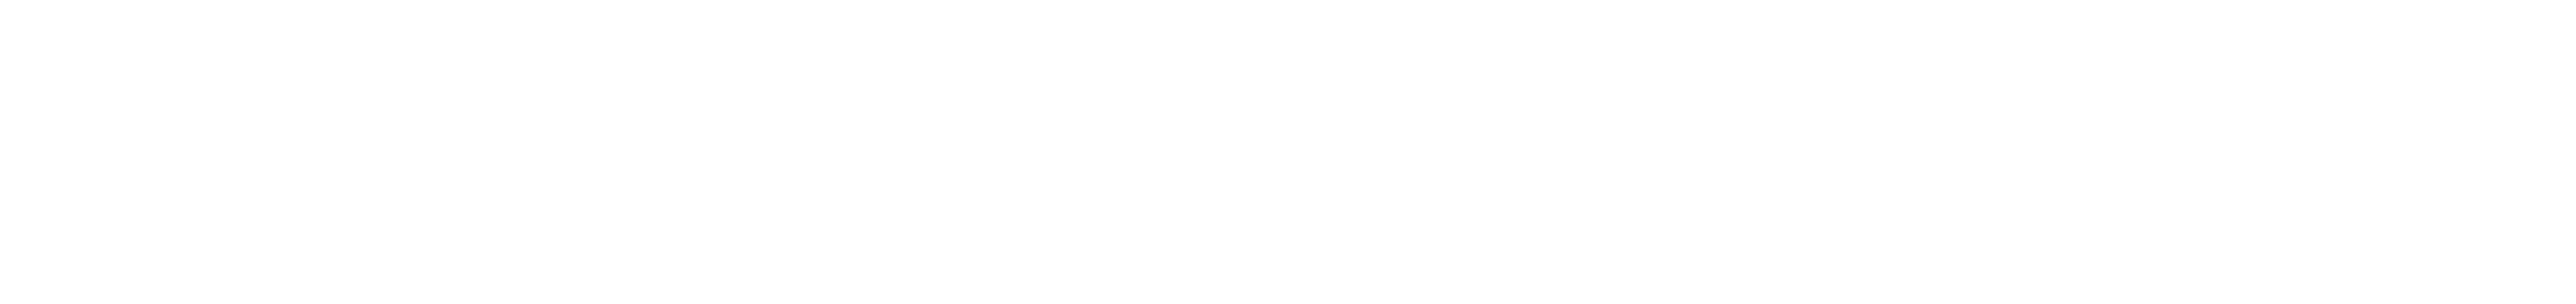 SURROUND logo in white